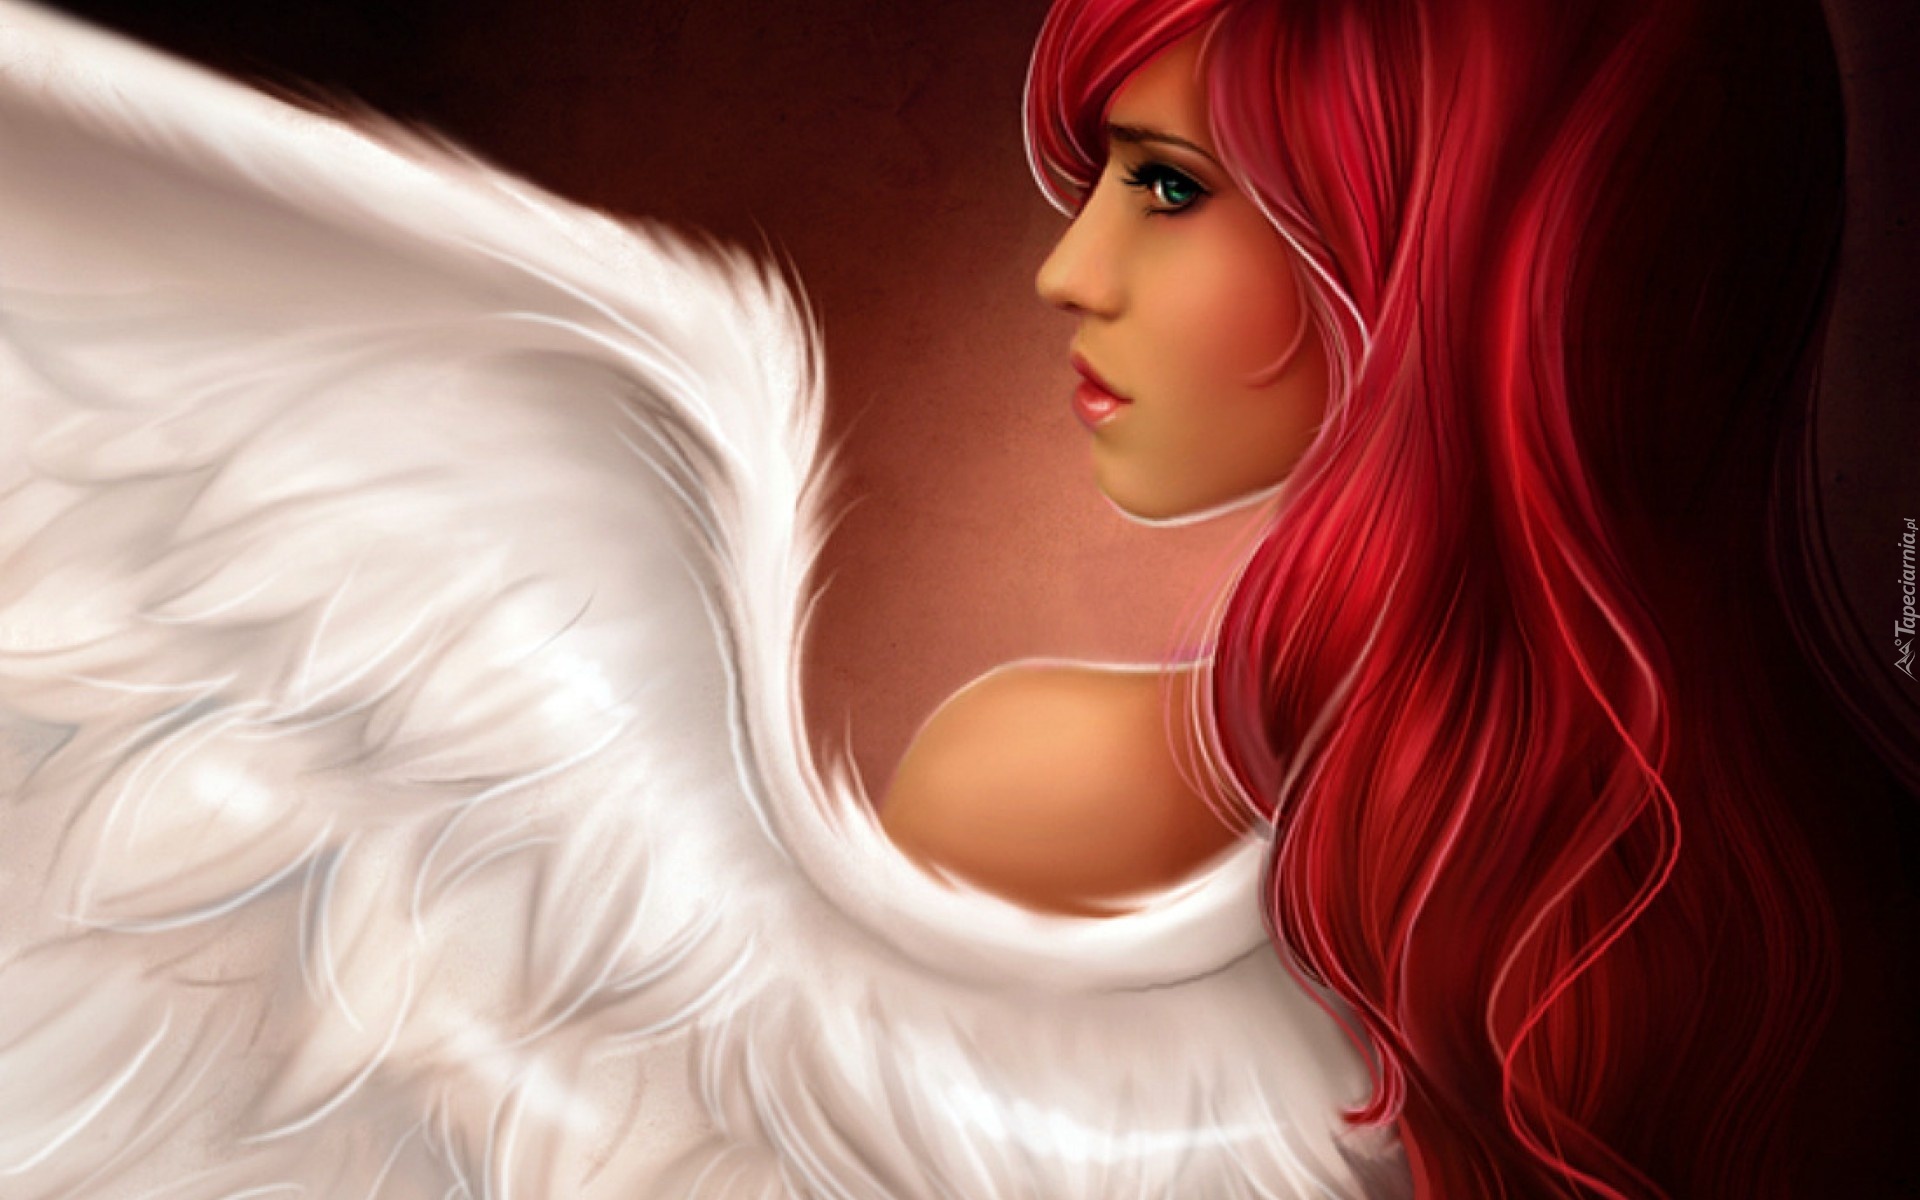 Profil, Anioła